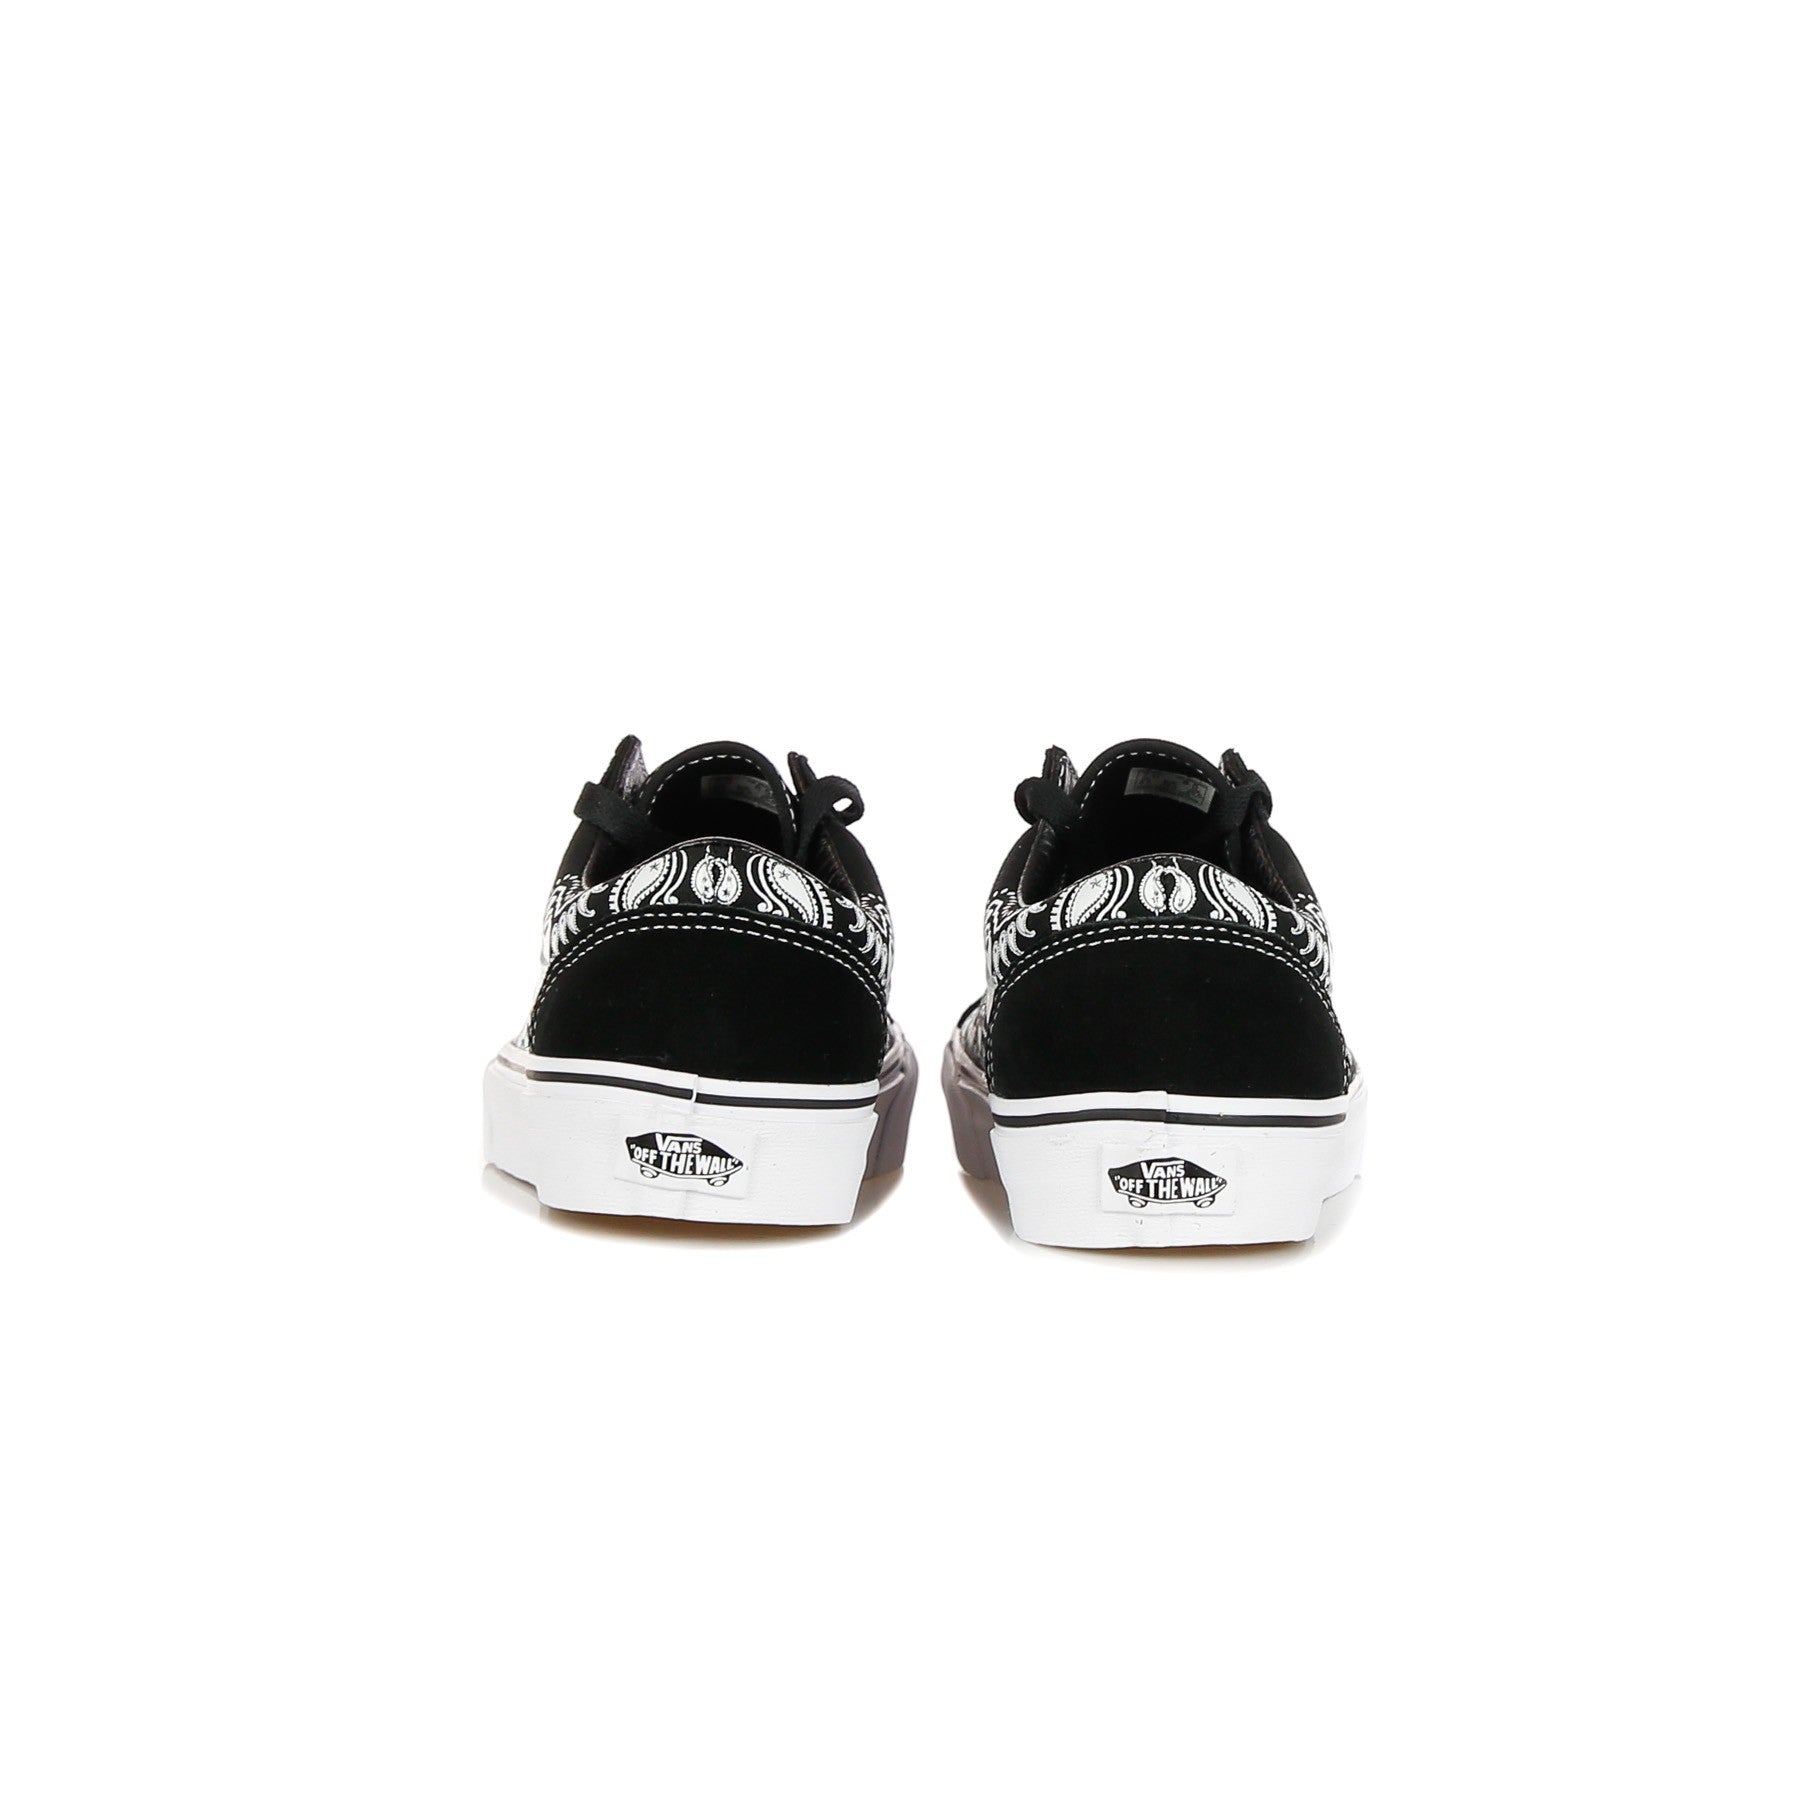 Low Men's Shoe Style 36 (bandana) Black/true White